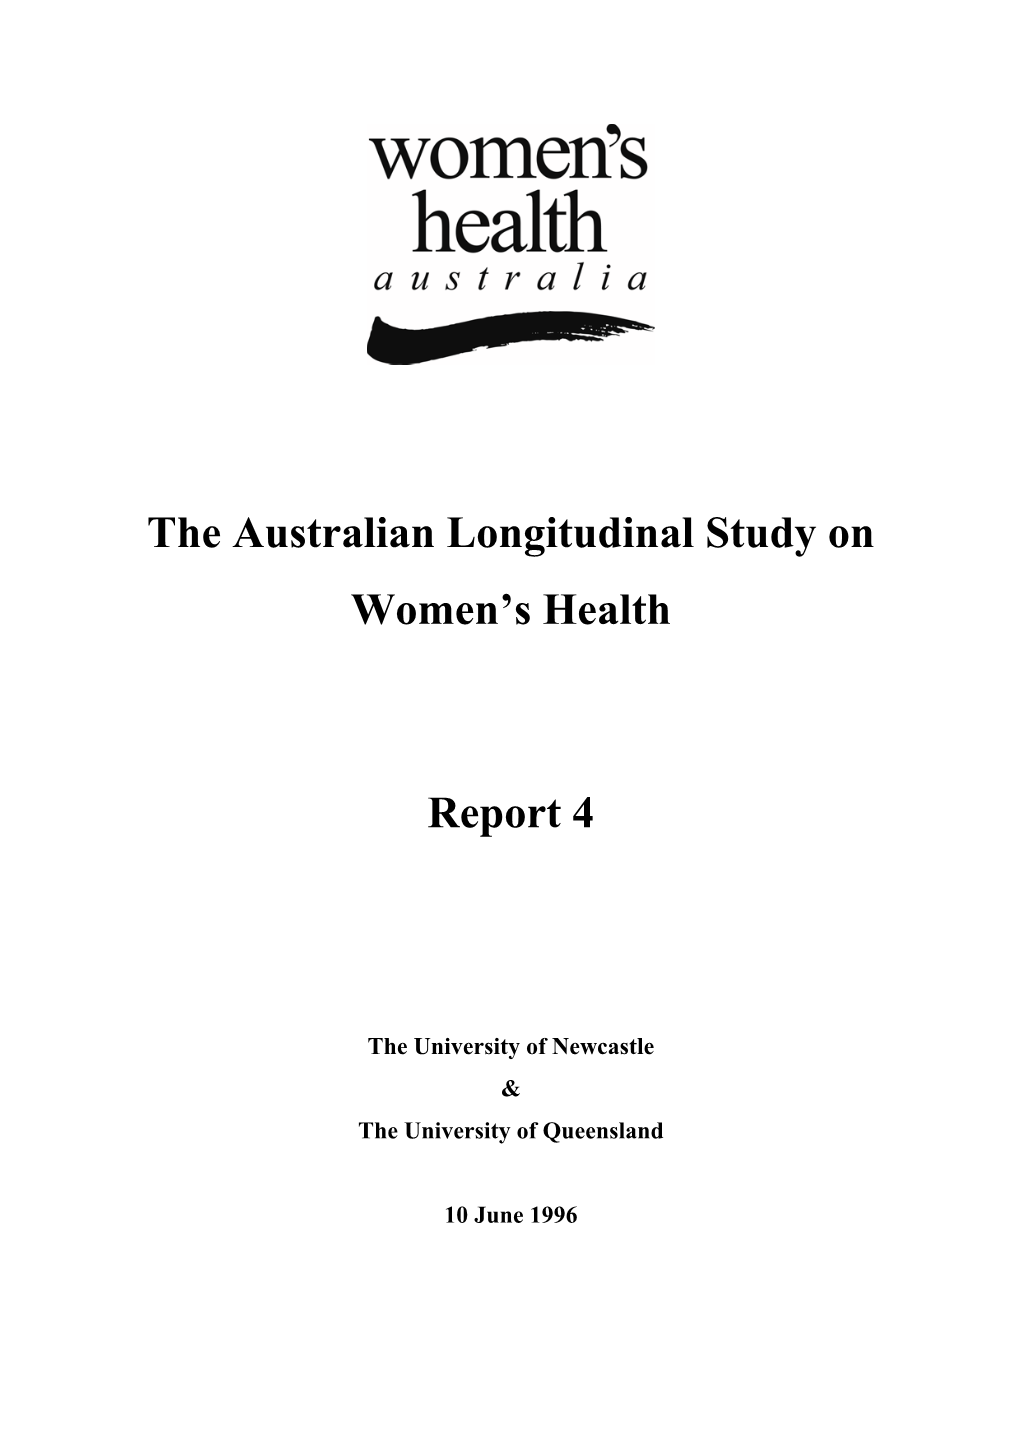 The Australian Longitudinal Study on Women's Health Report 4